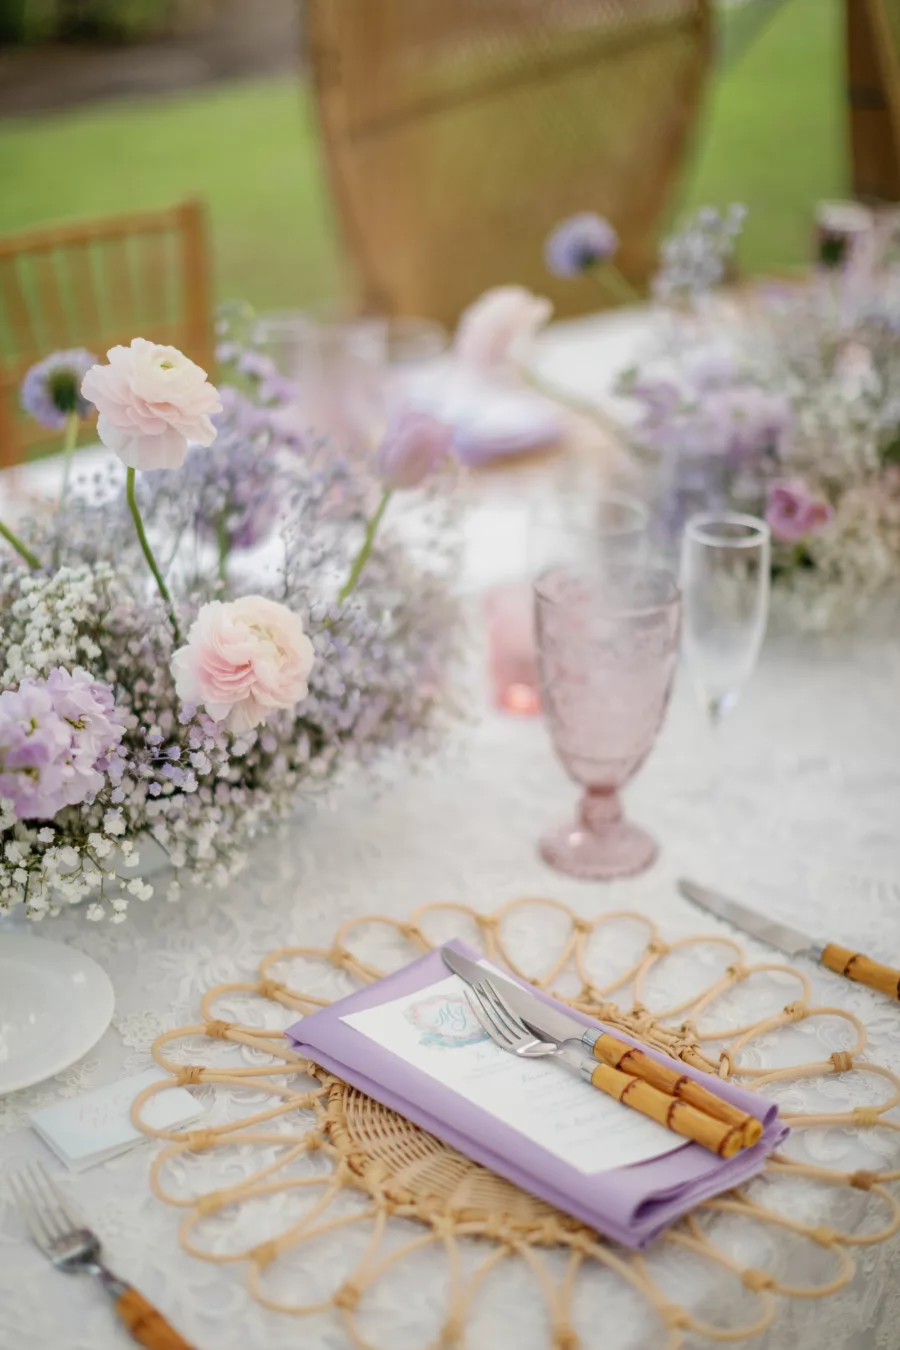 Rattan Flower Placemat with Purple Linen, Bamboo Flatware | Purple Hydrangrea, Baby's Breath, and Pink Ranunculus Centerpiece Ideas | Luxurious Pastel Wedding Reception Inspiration